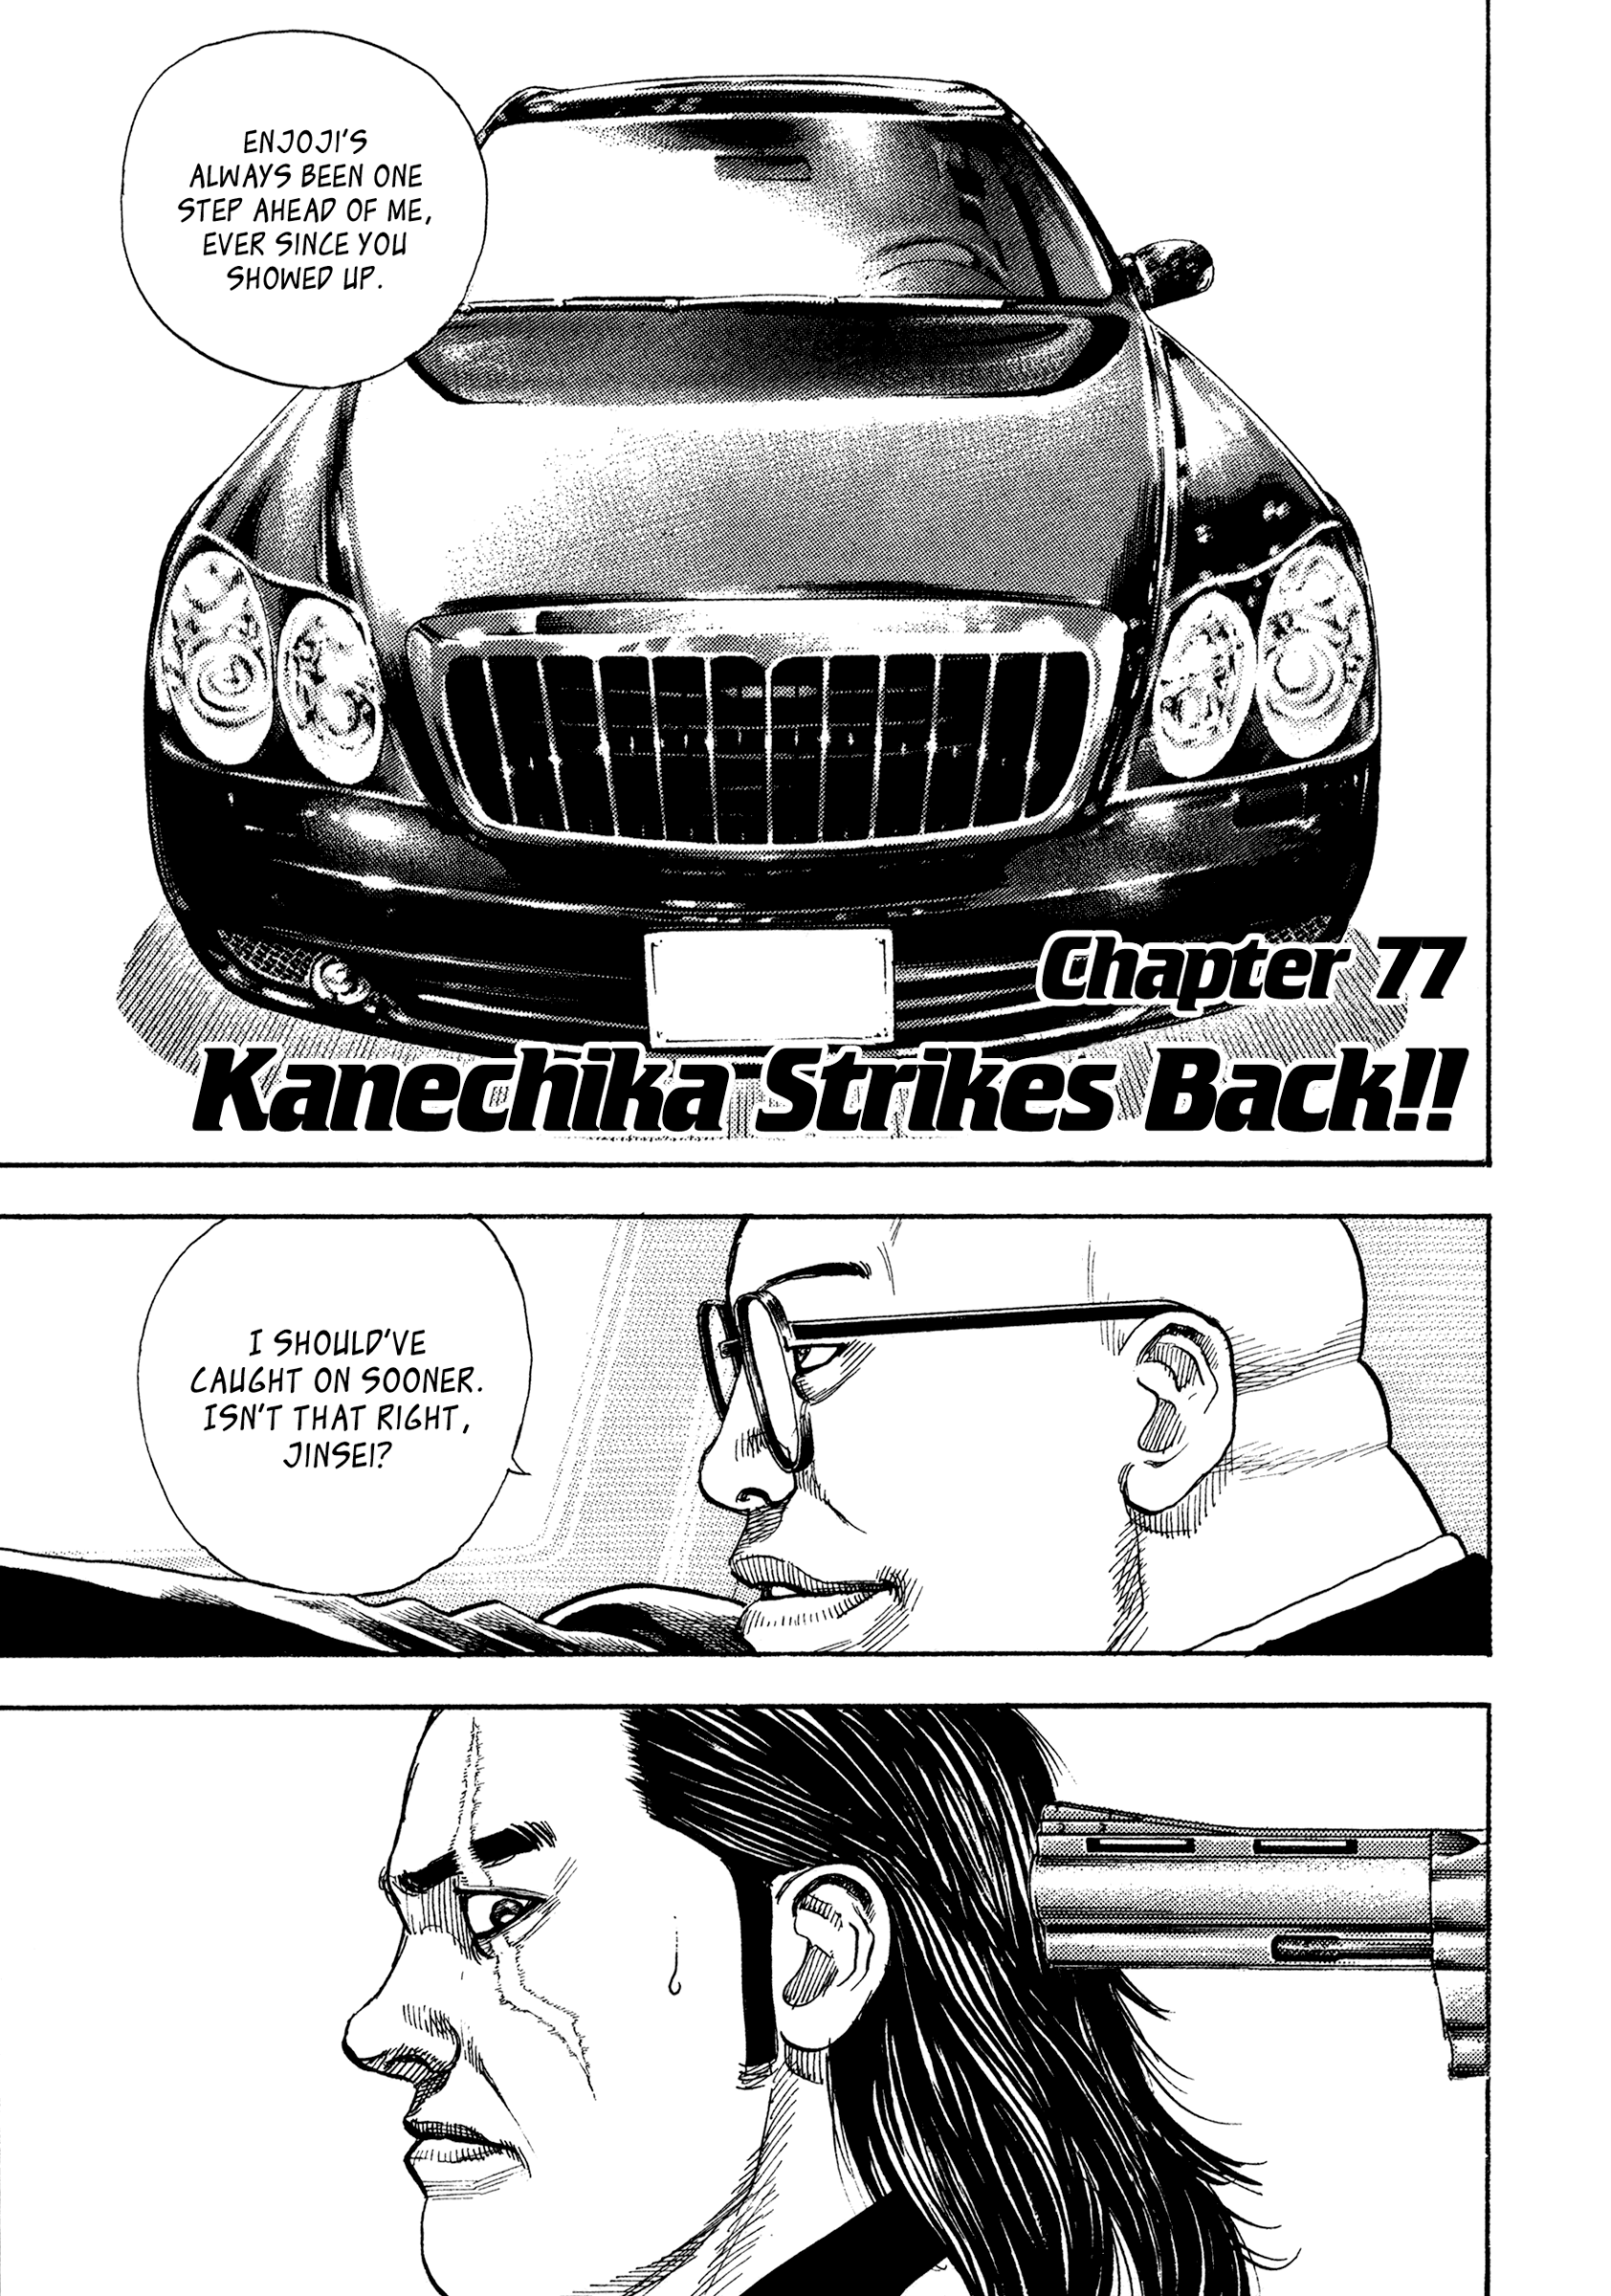 Kizu Darake No Jinsei Vol.11 Chapter 77: Kanechika Strikes Back!! - Picture 1